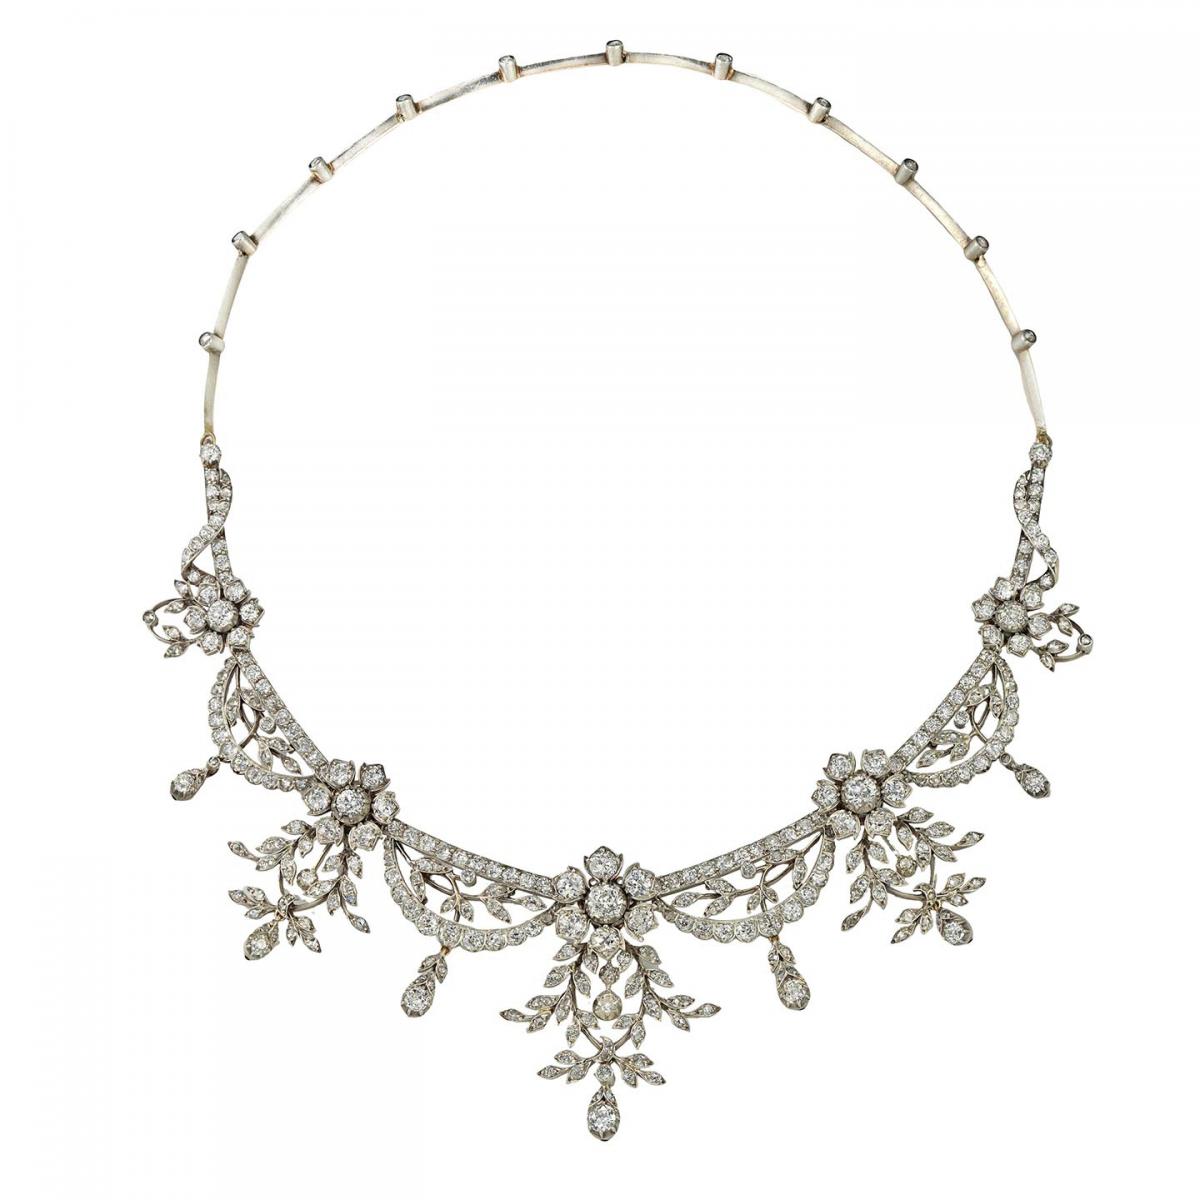 A late Victorian diamond-set tiara of floral design, consisting of five diamond-set flowers